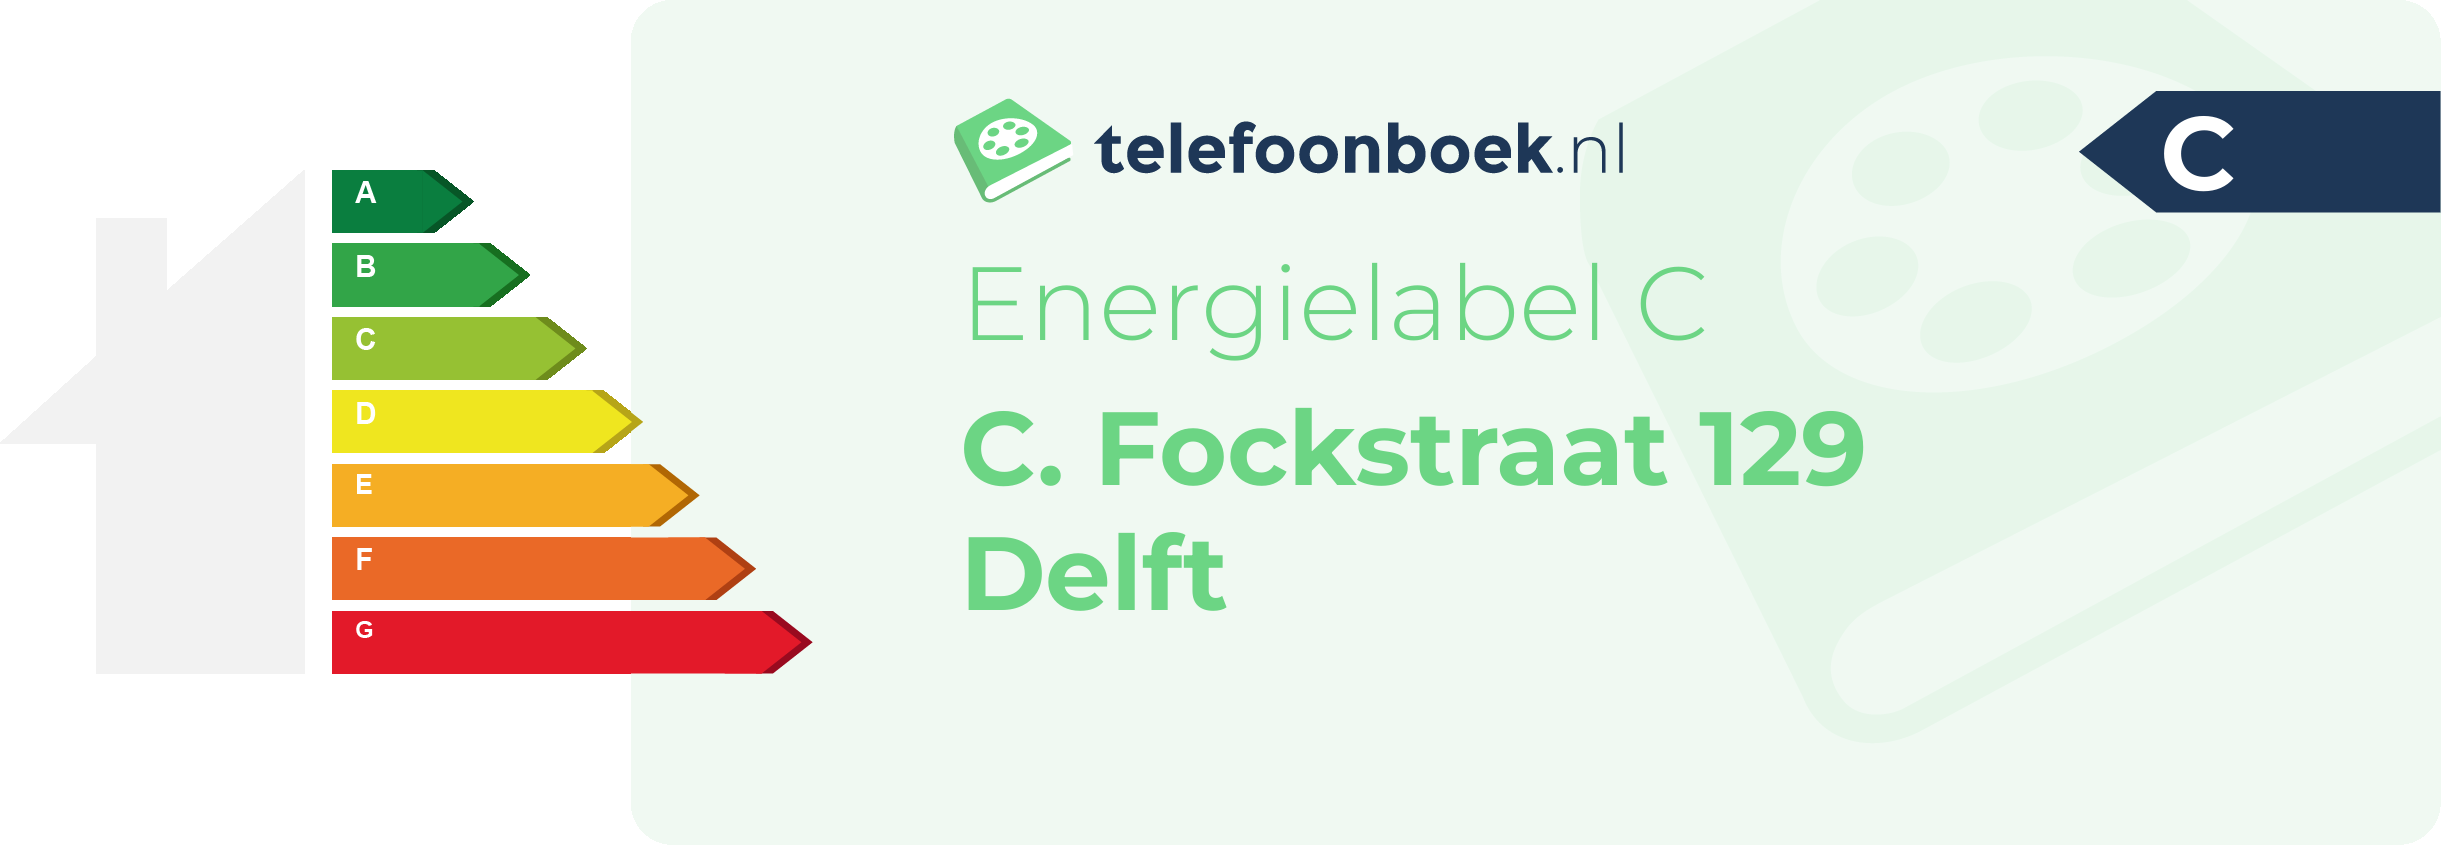 Energielabel C. Fockstraat 129 Delft